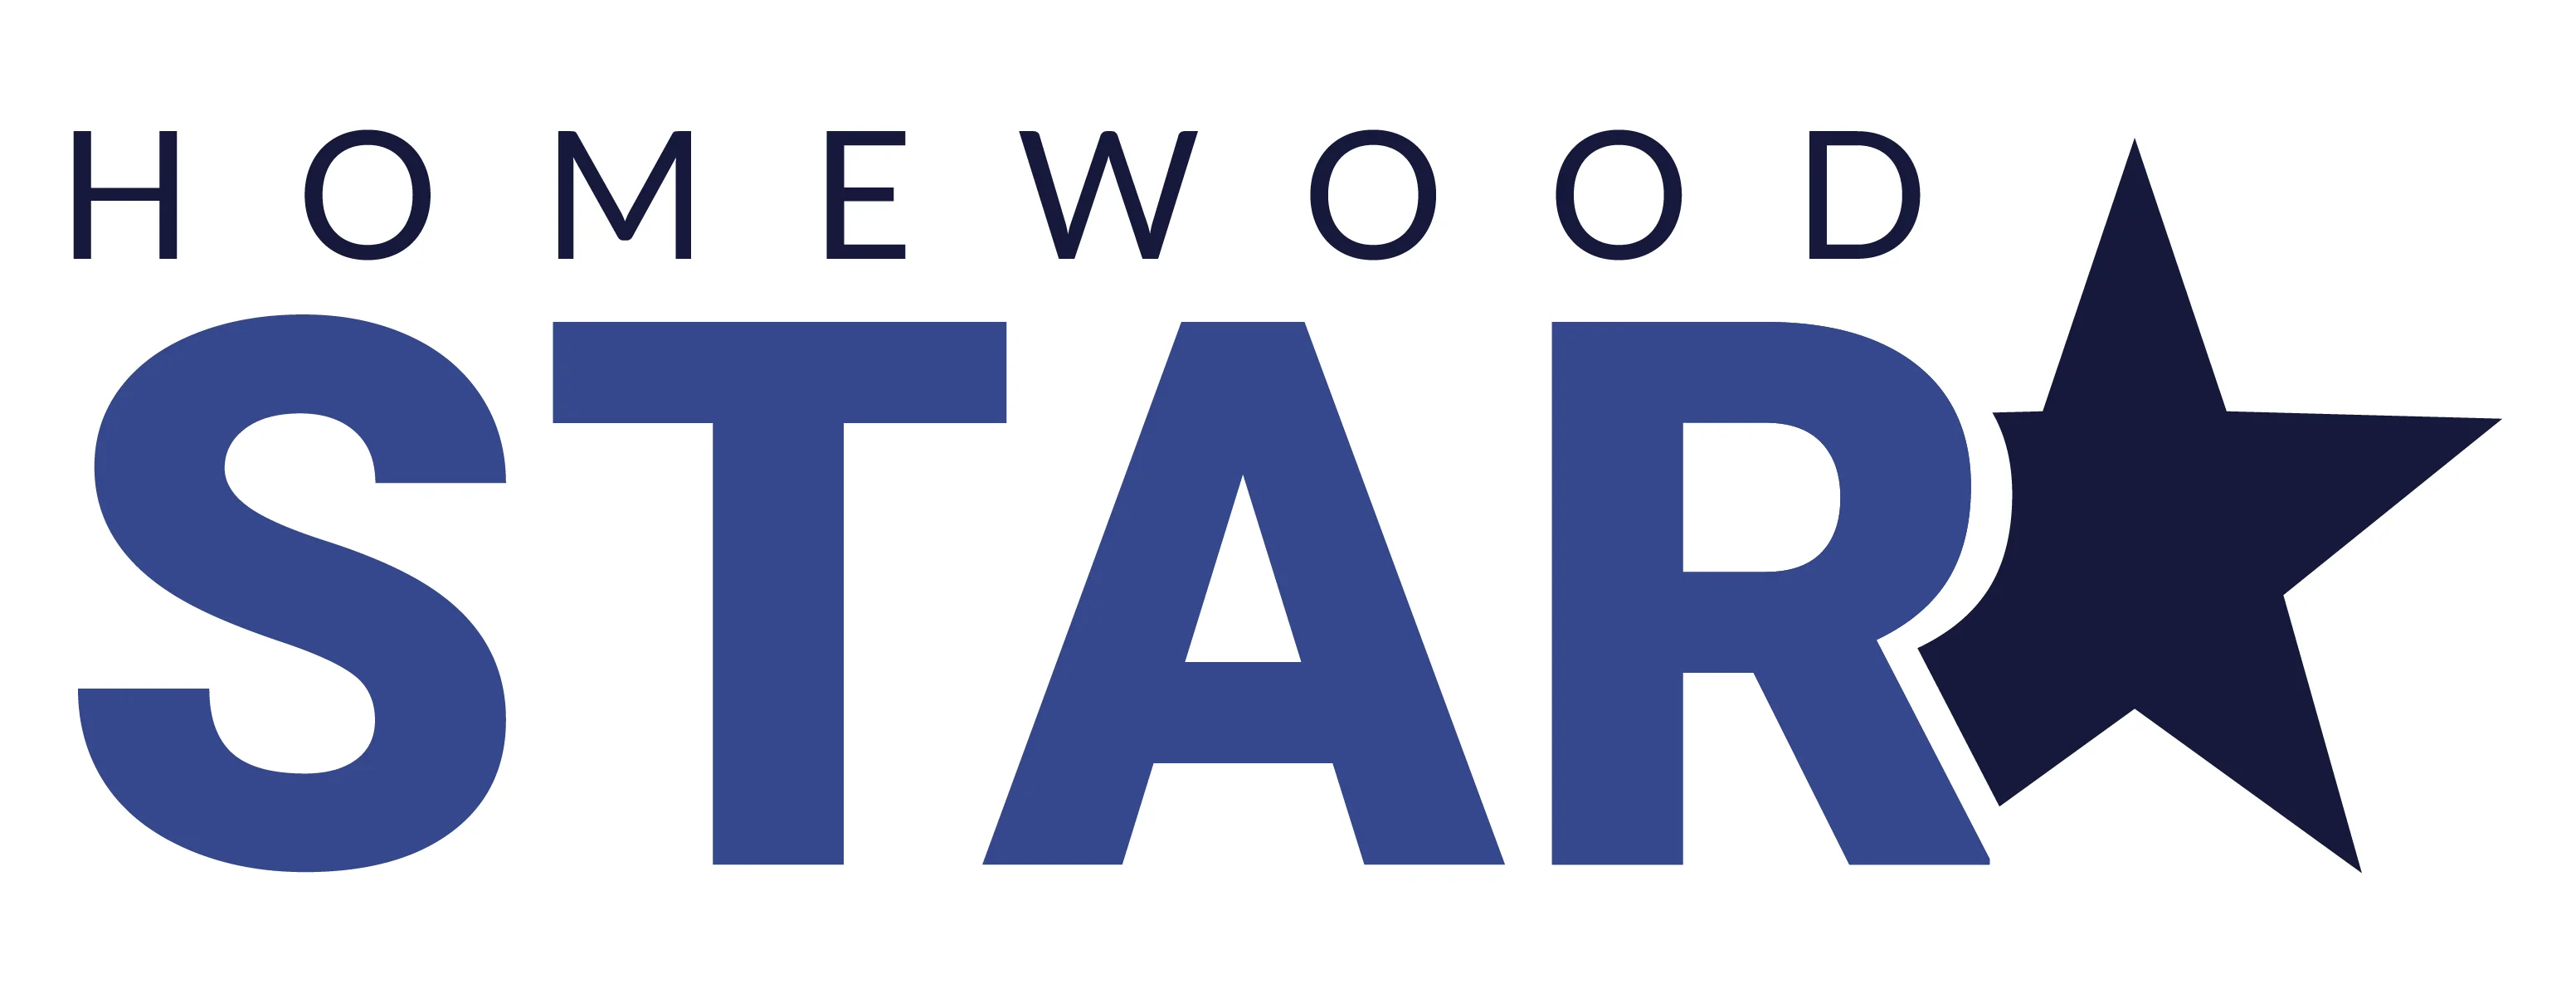 Homewood Star logo